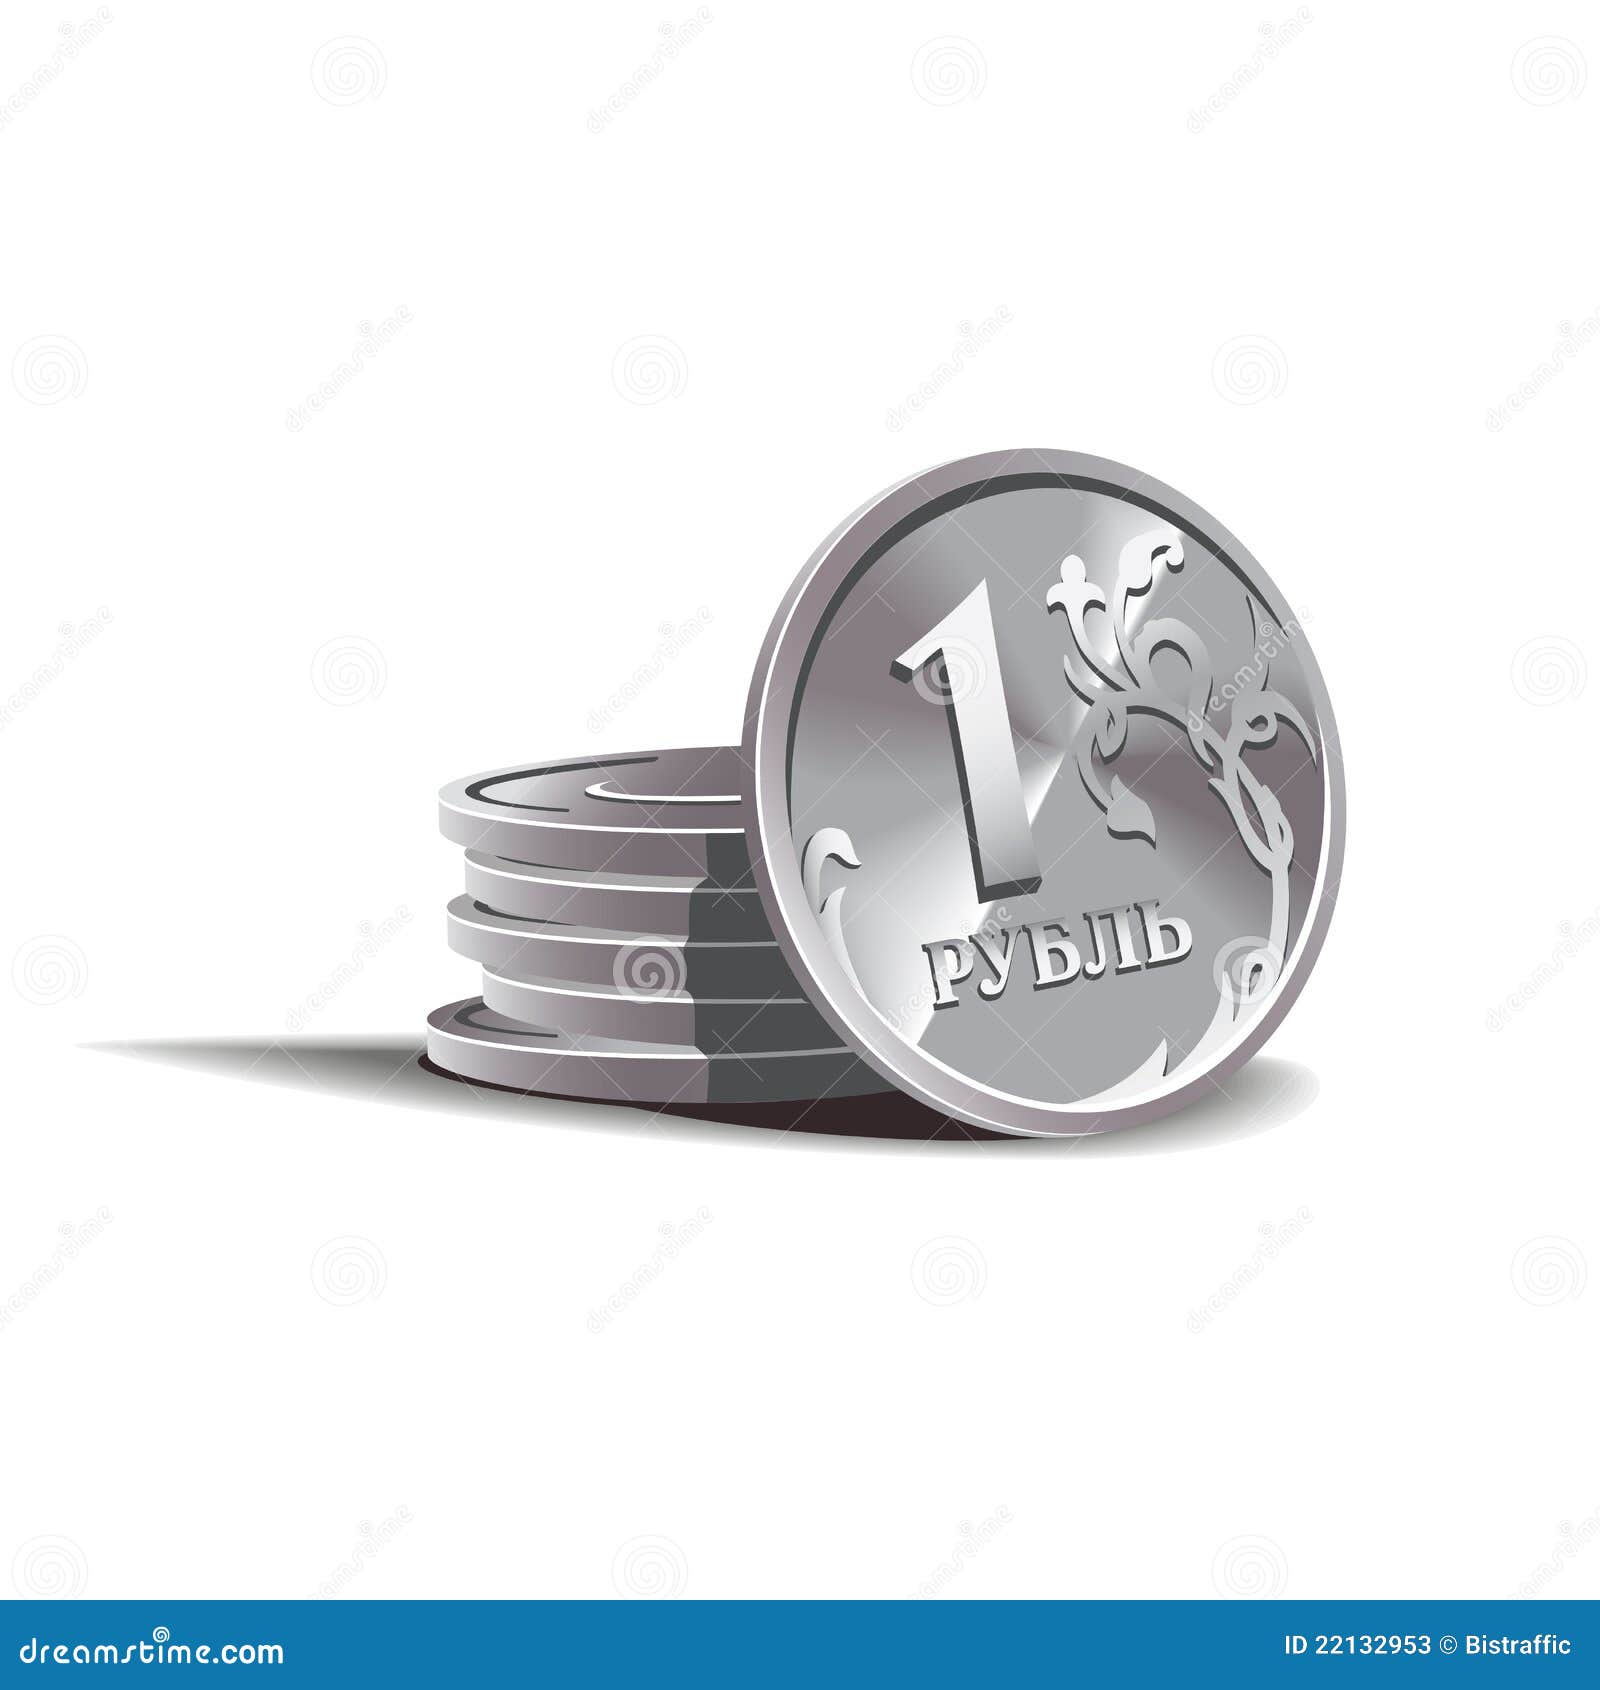 ruble coins , financial theme